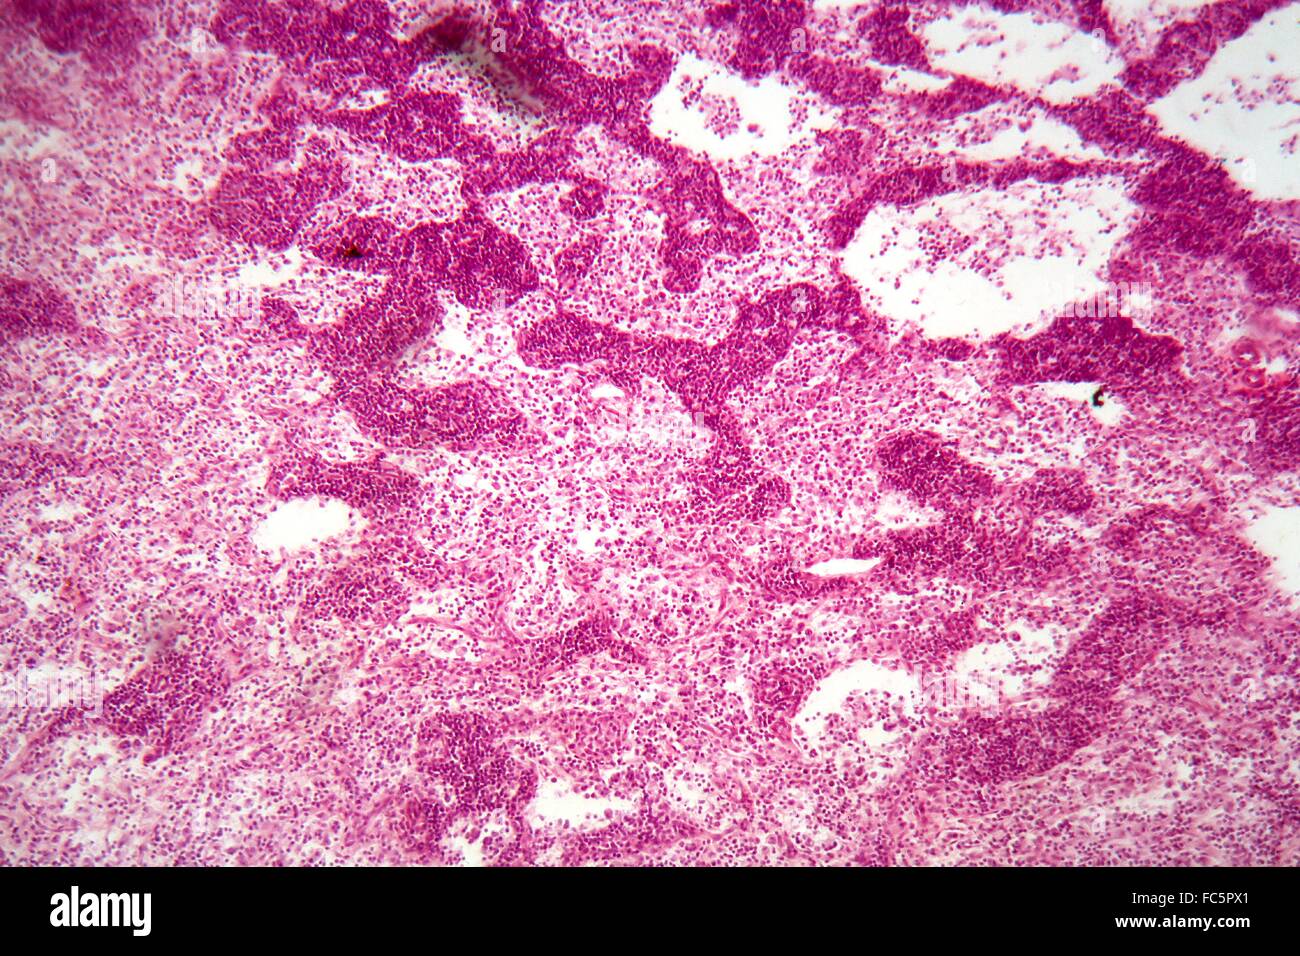 Lymph node under the microscope. Stock Photo